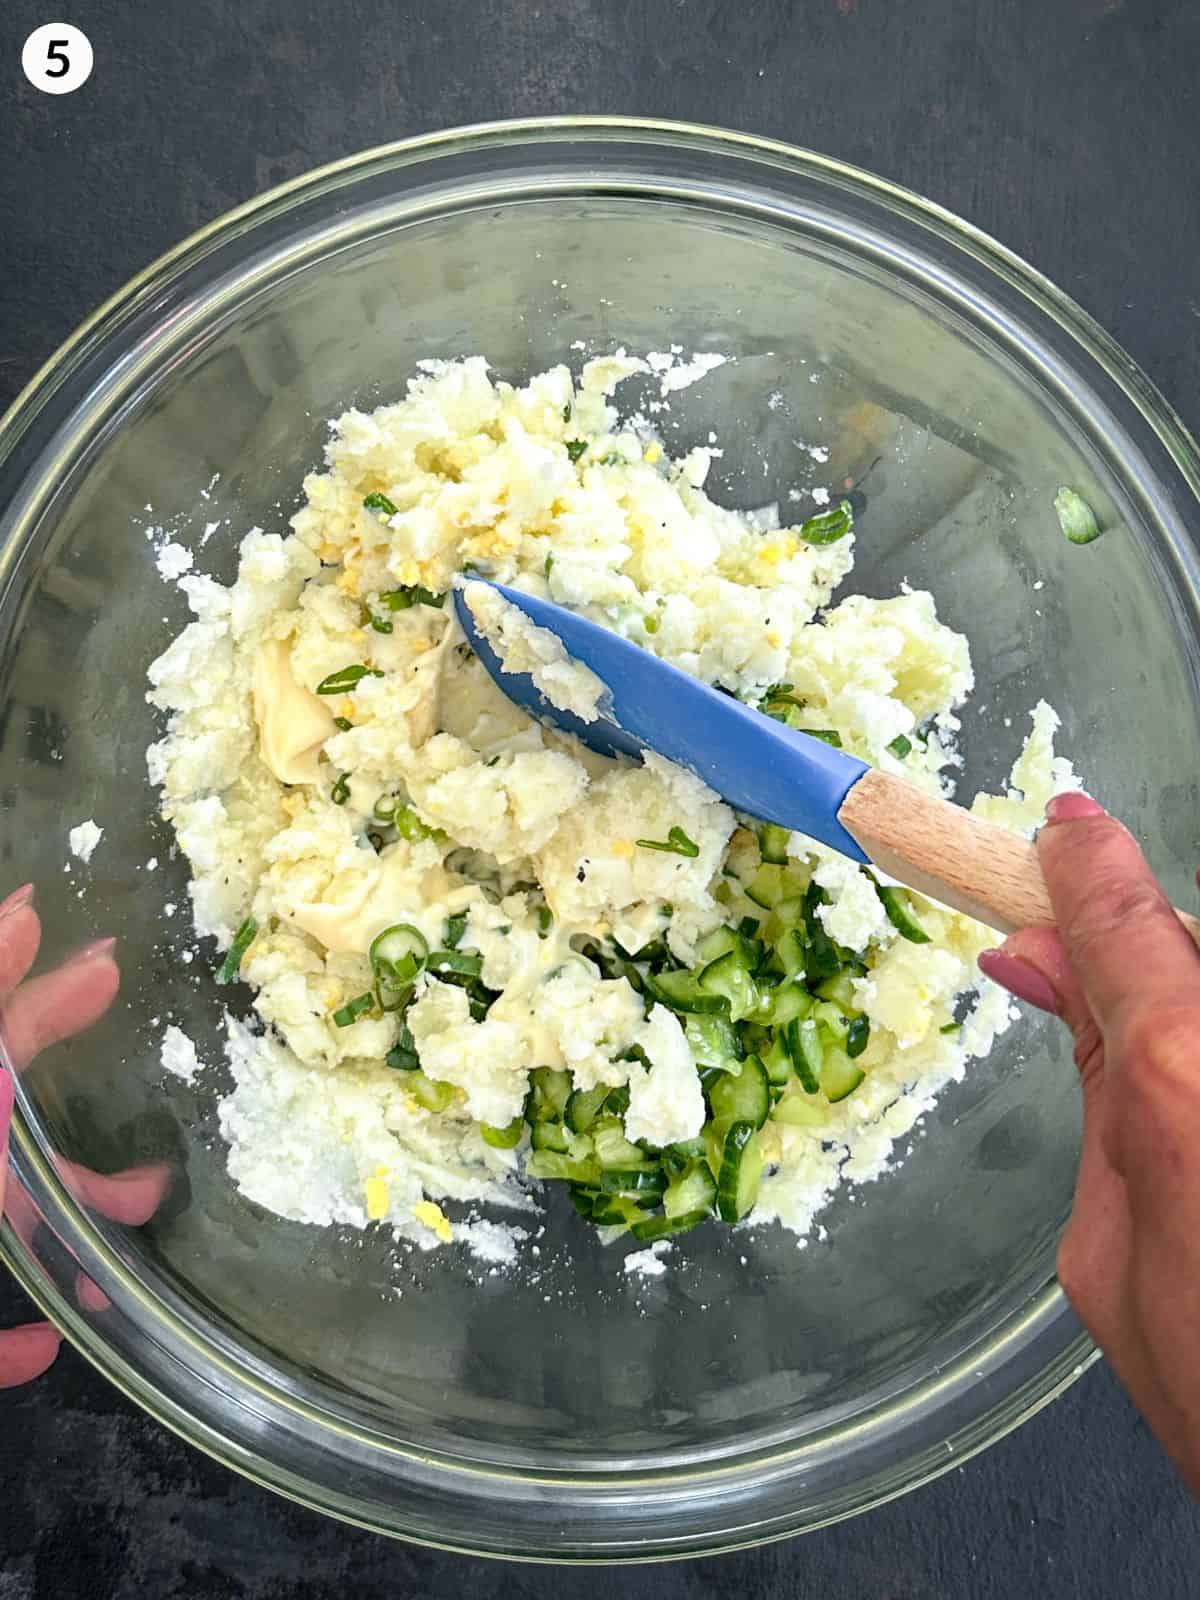 Mixing Korean potato salad ingredients in a glass bowl